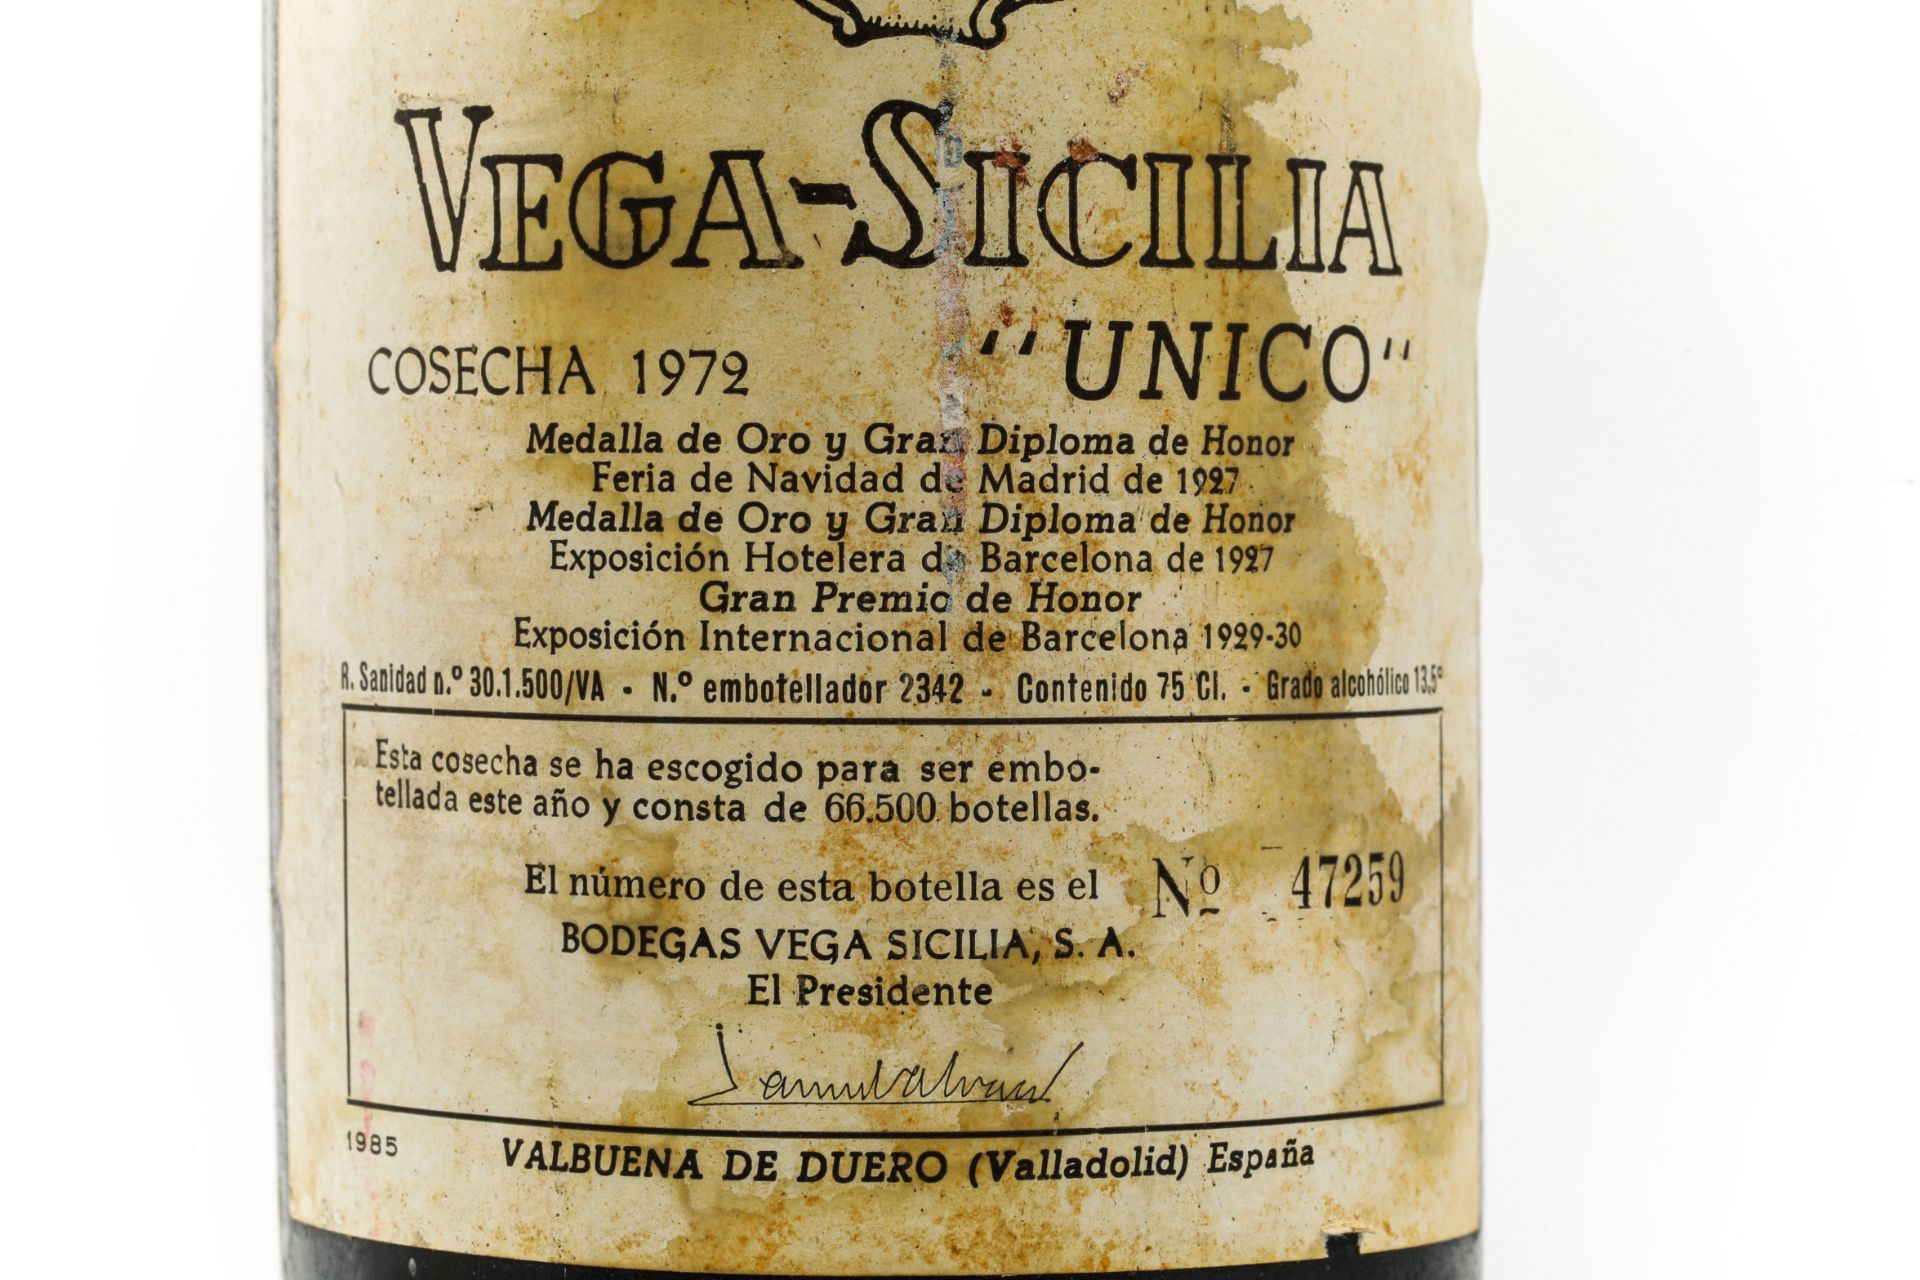 VEGA SICILIO UNICO sur production de 66 500 bouteilles Ribeira del Duero 1972 - Image 3 of 8